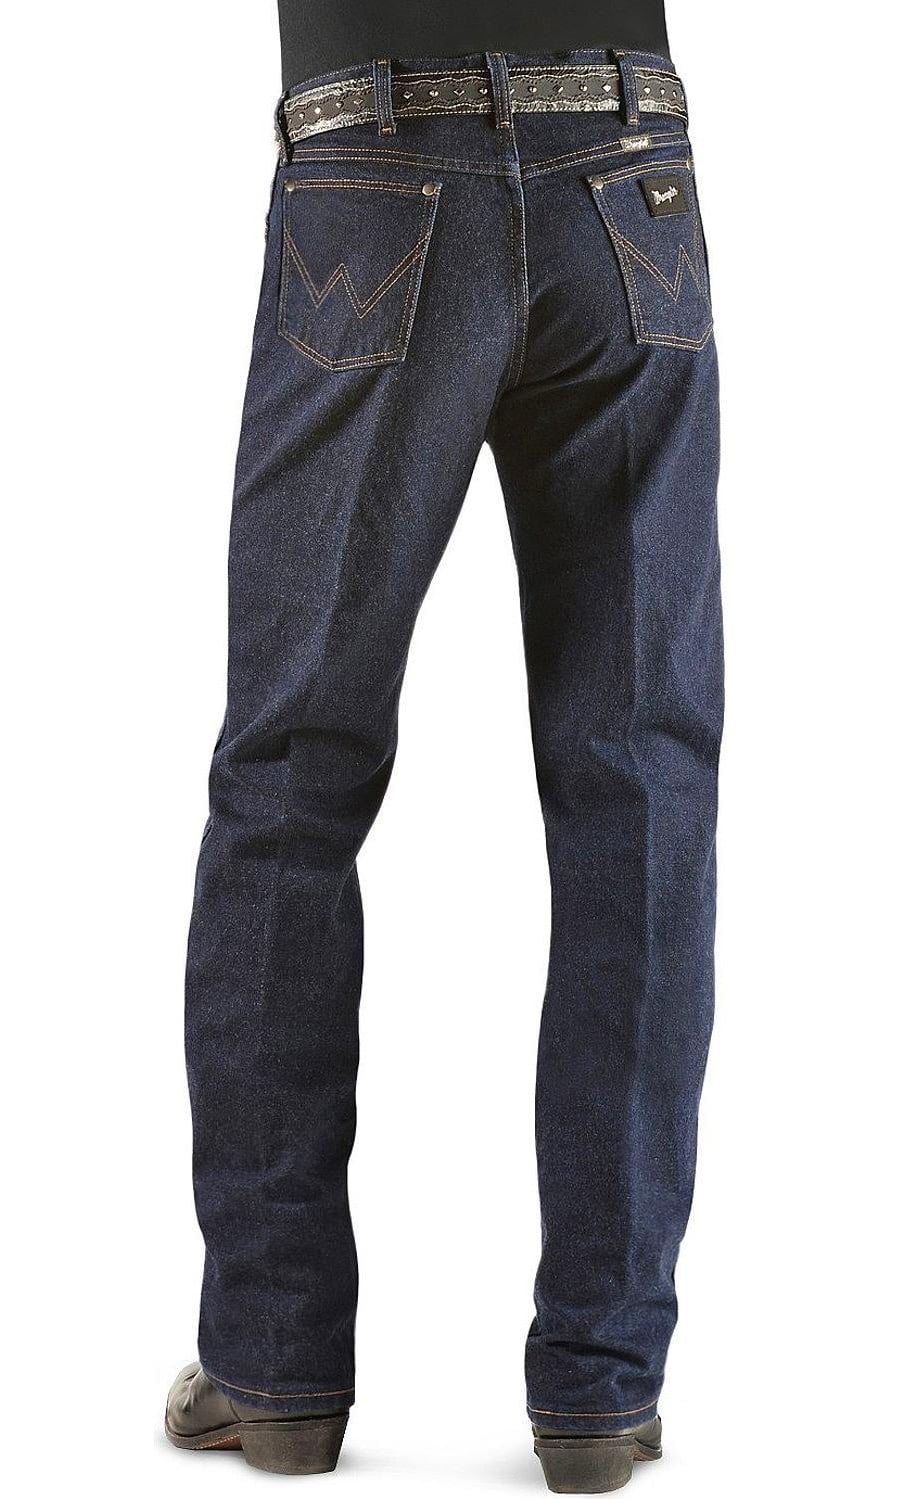 wrangler men's silver edition jean,dark denim,38x36 - Walmart.com